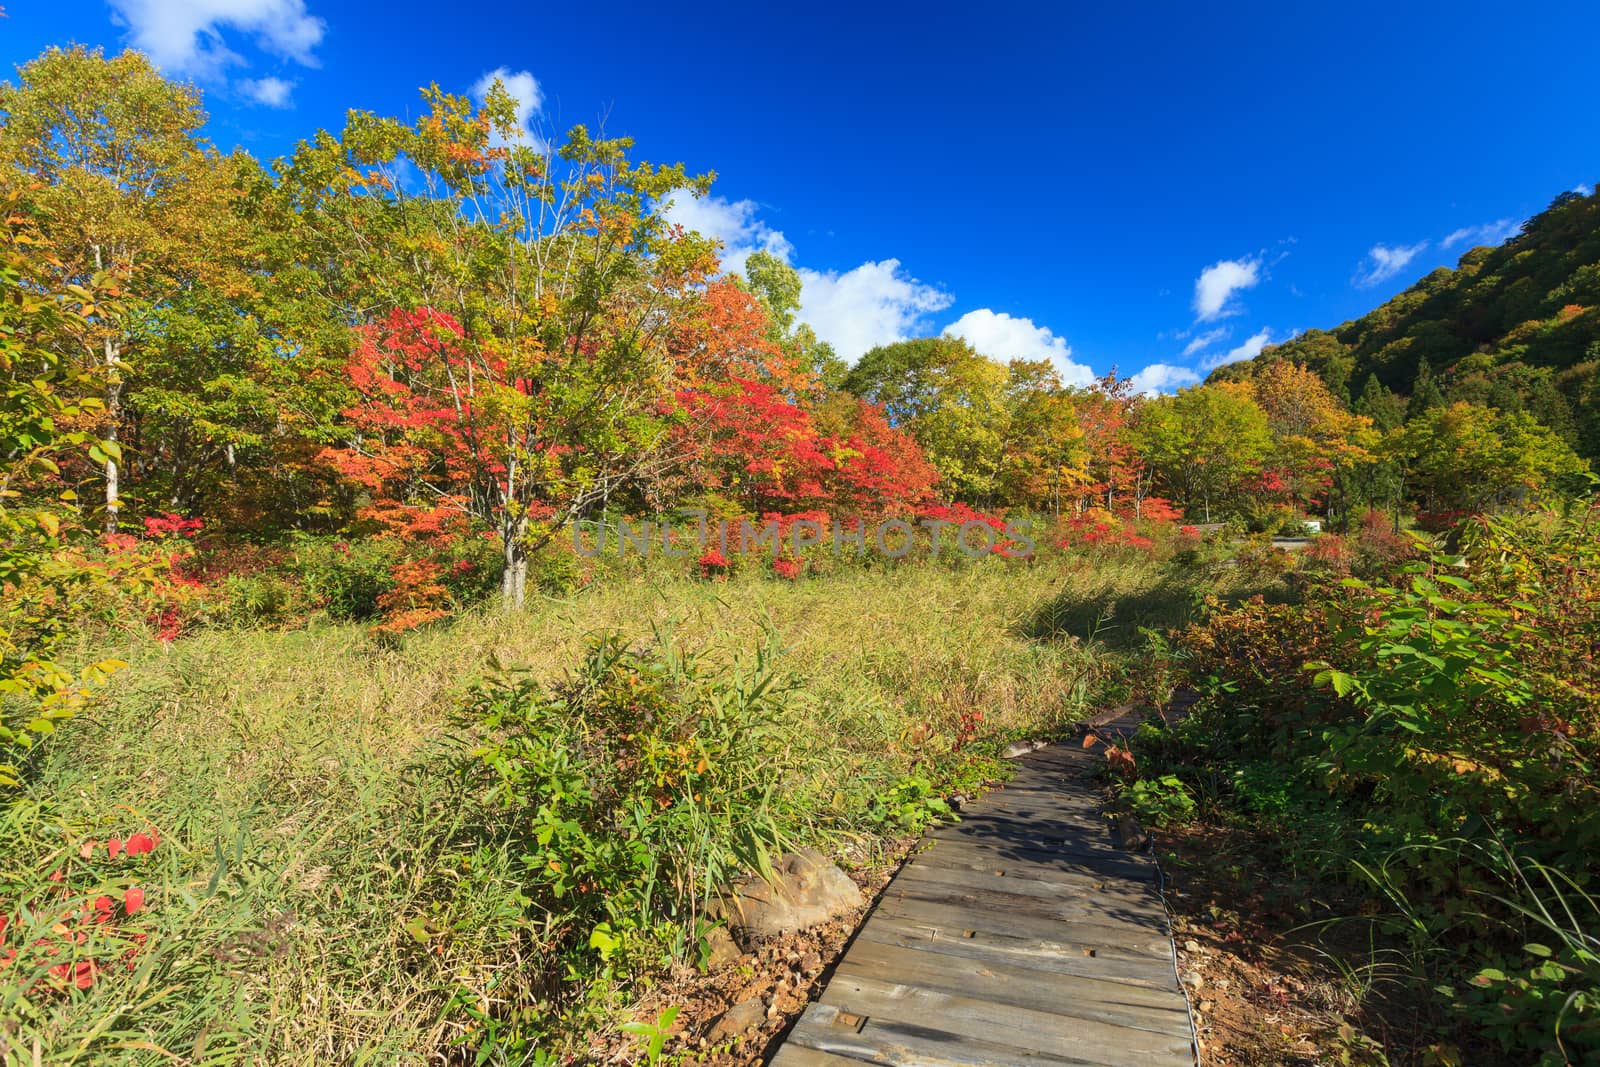 Nature trails in autumn, Japan. by mrpeak